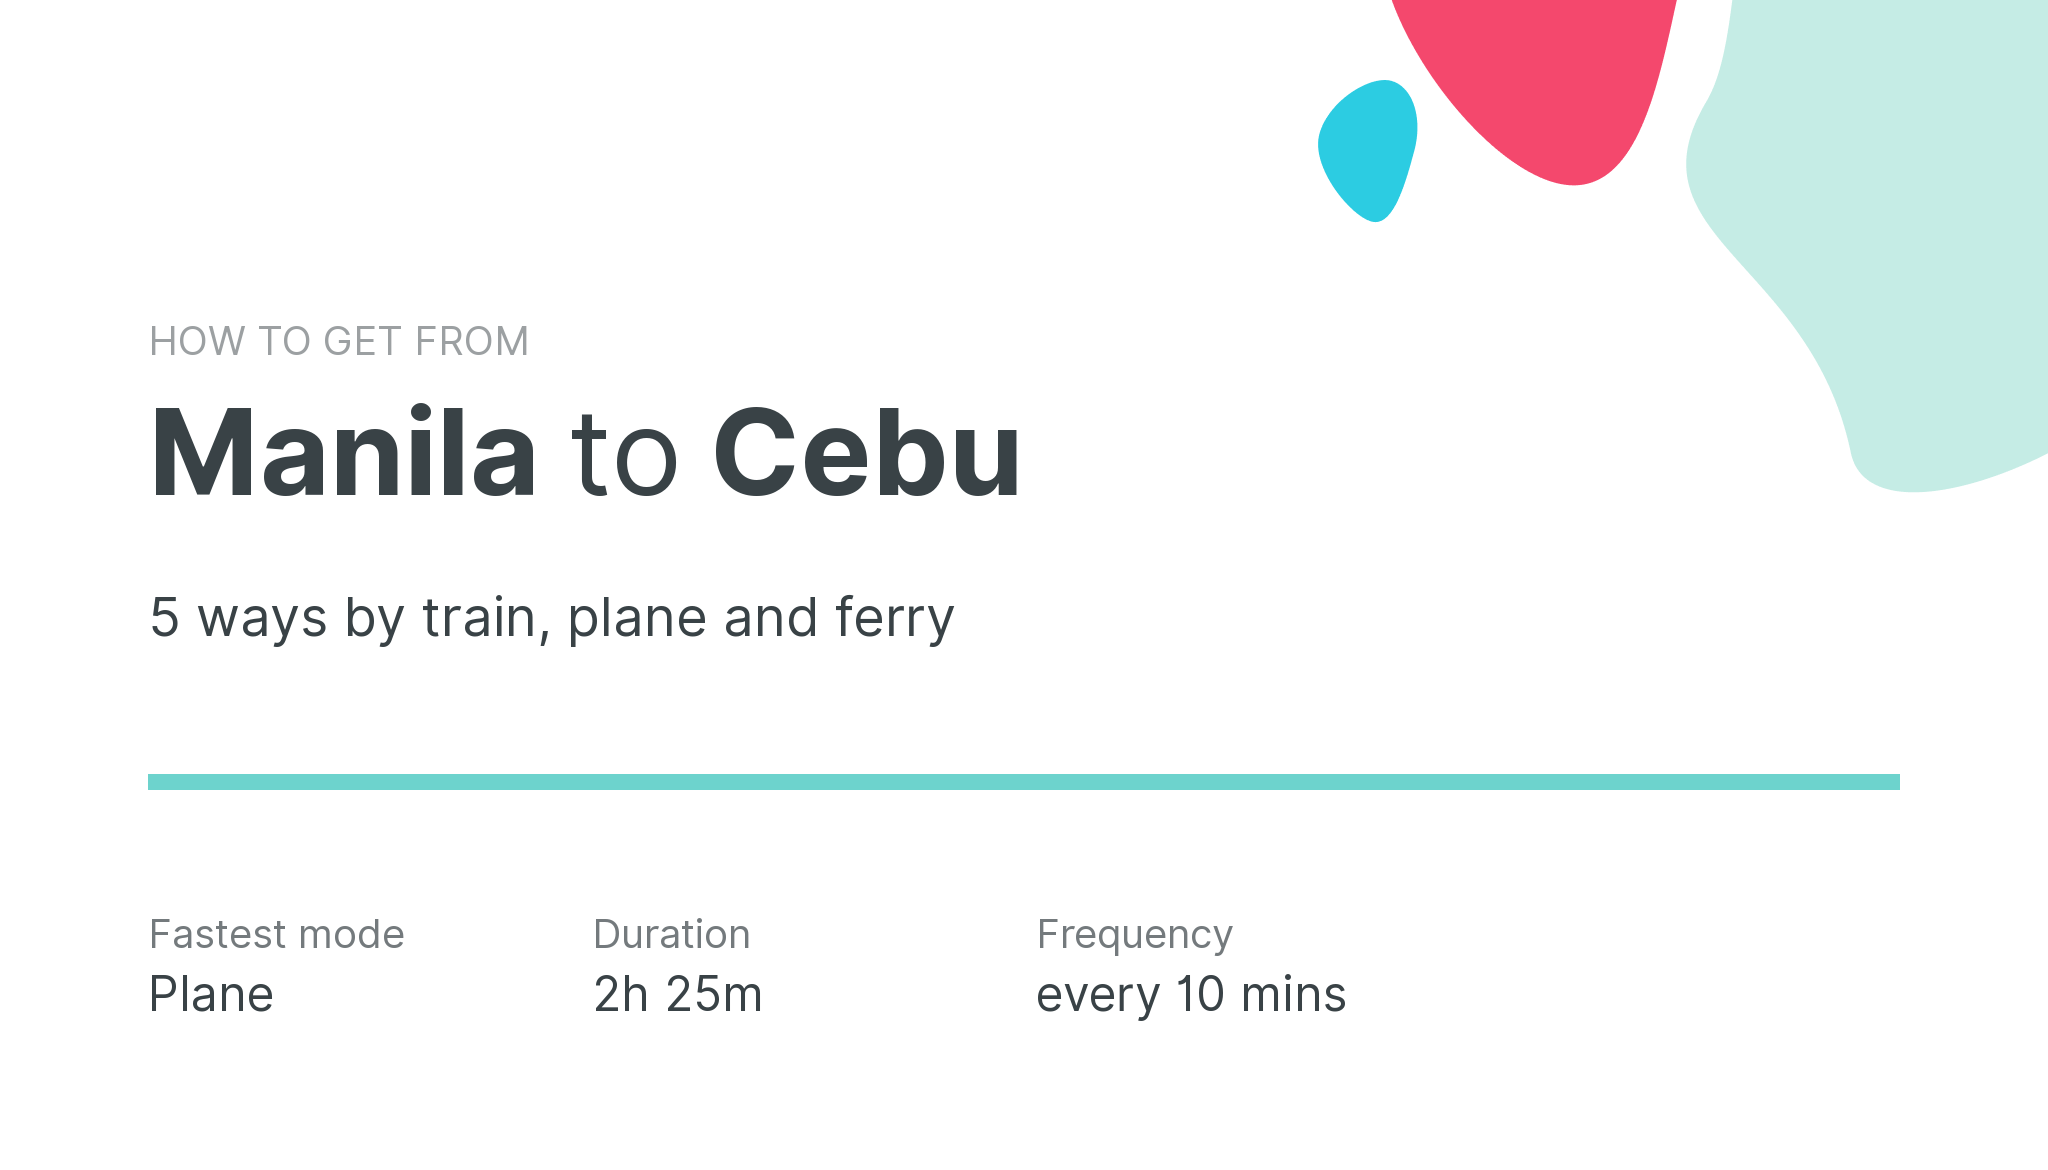 How do I get from Manila to Cebu